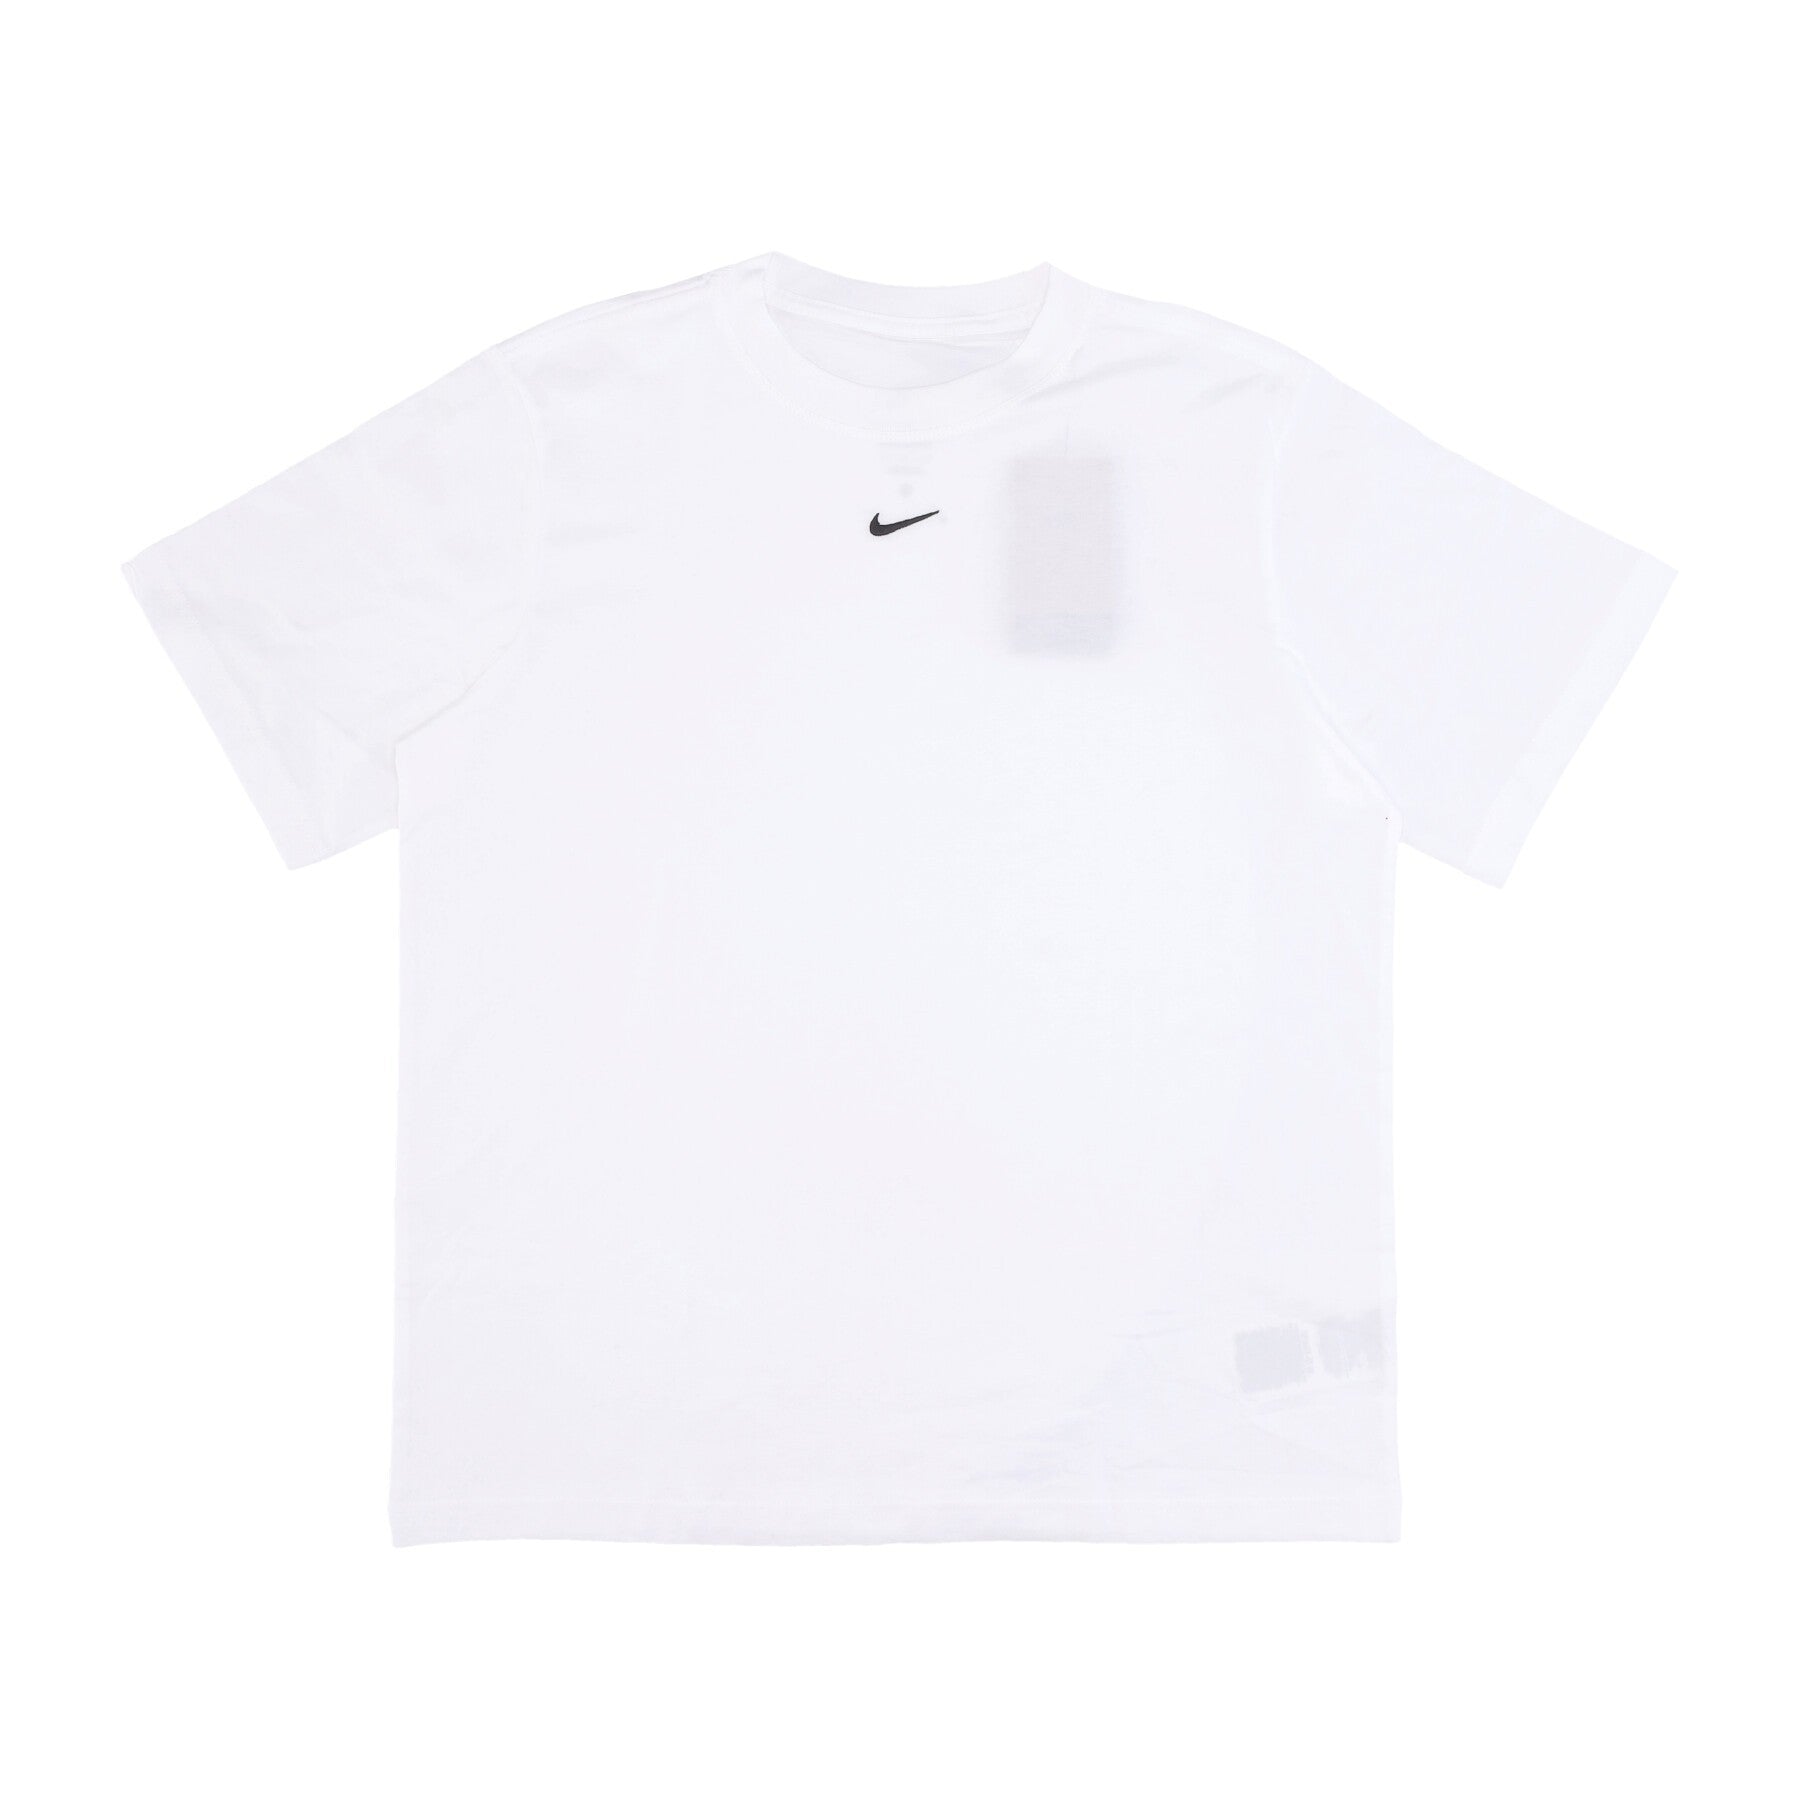 Nike, Maglietta Donna W Sportswear Essentials Lbr Tee, White/black